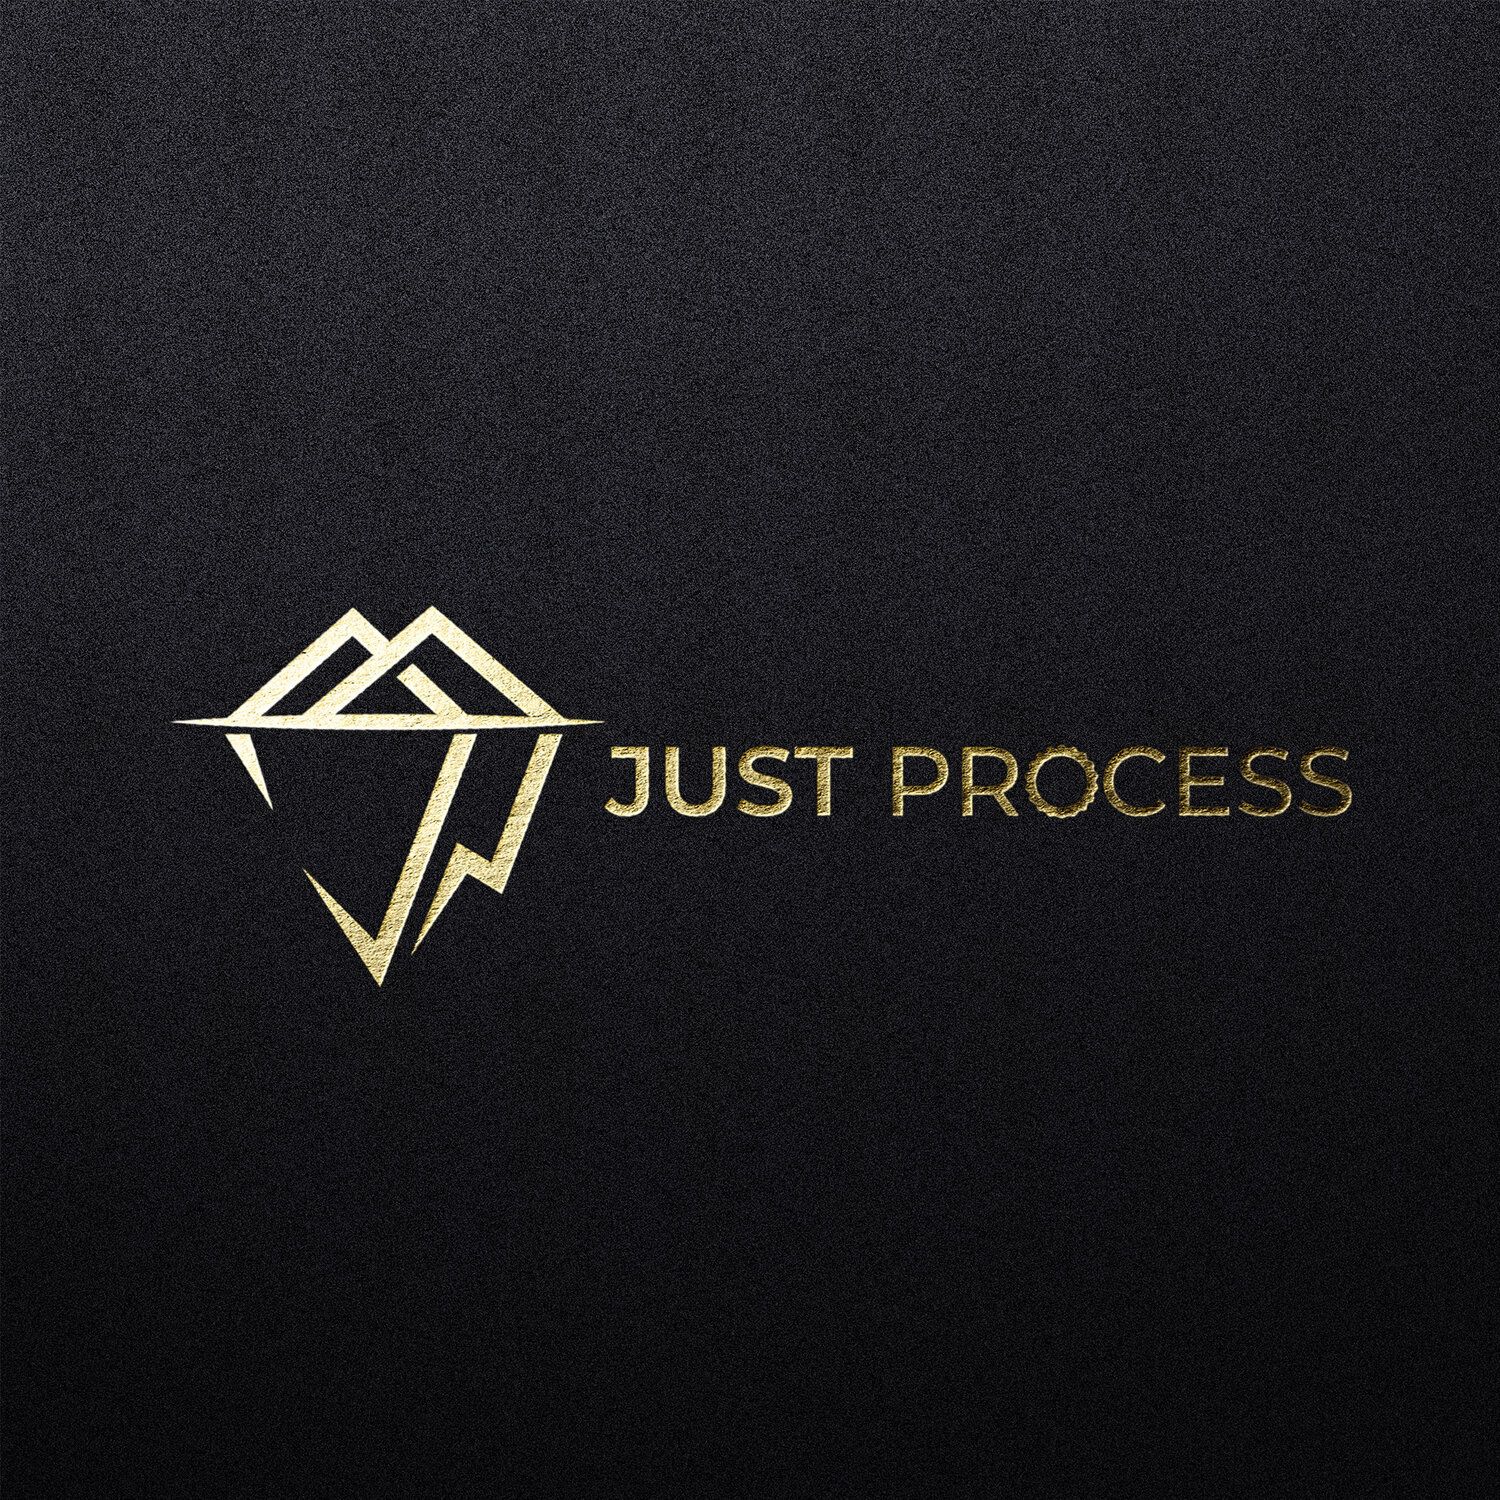 Just Process